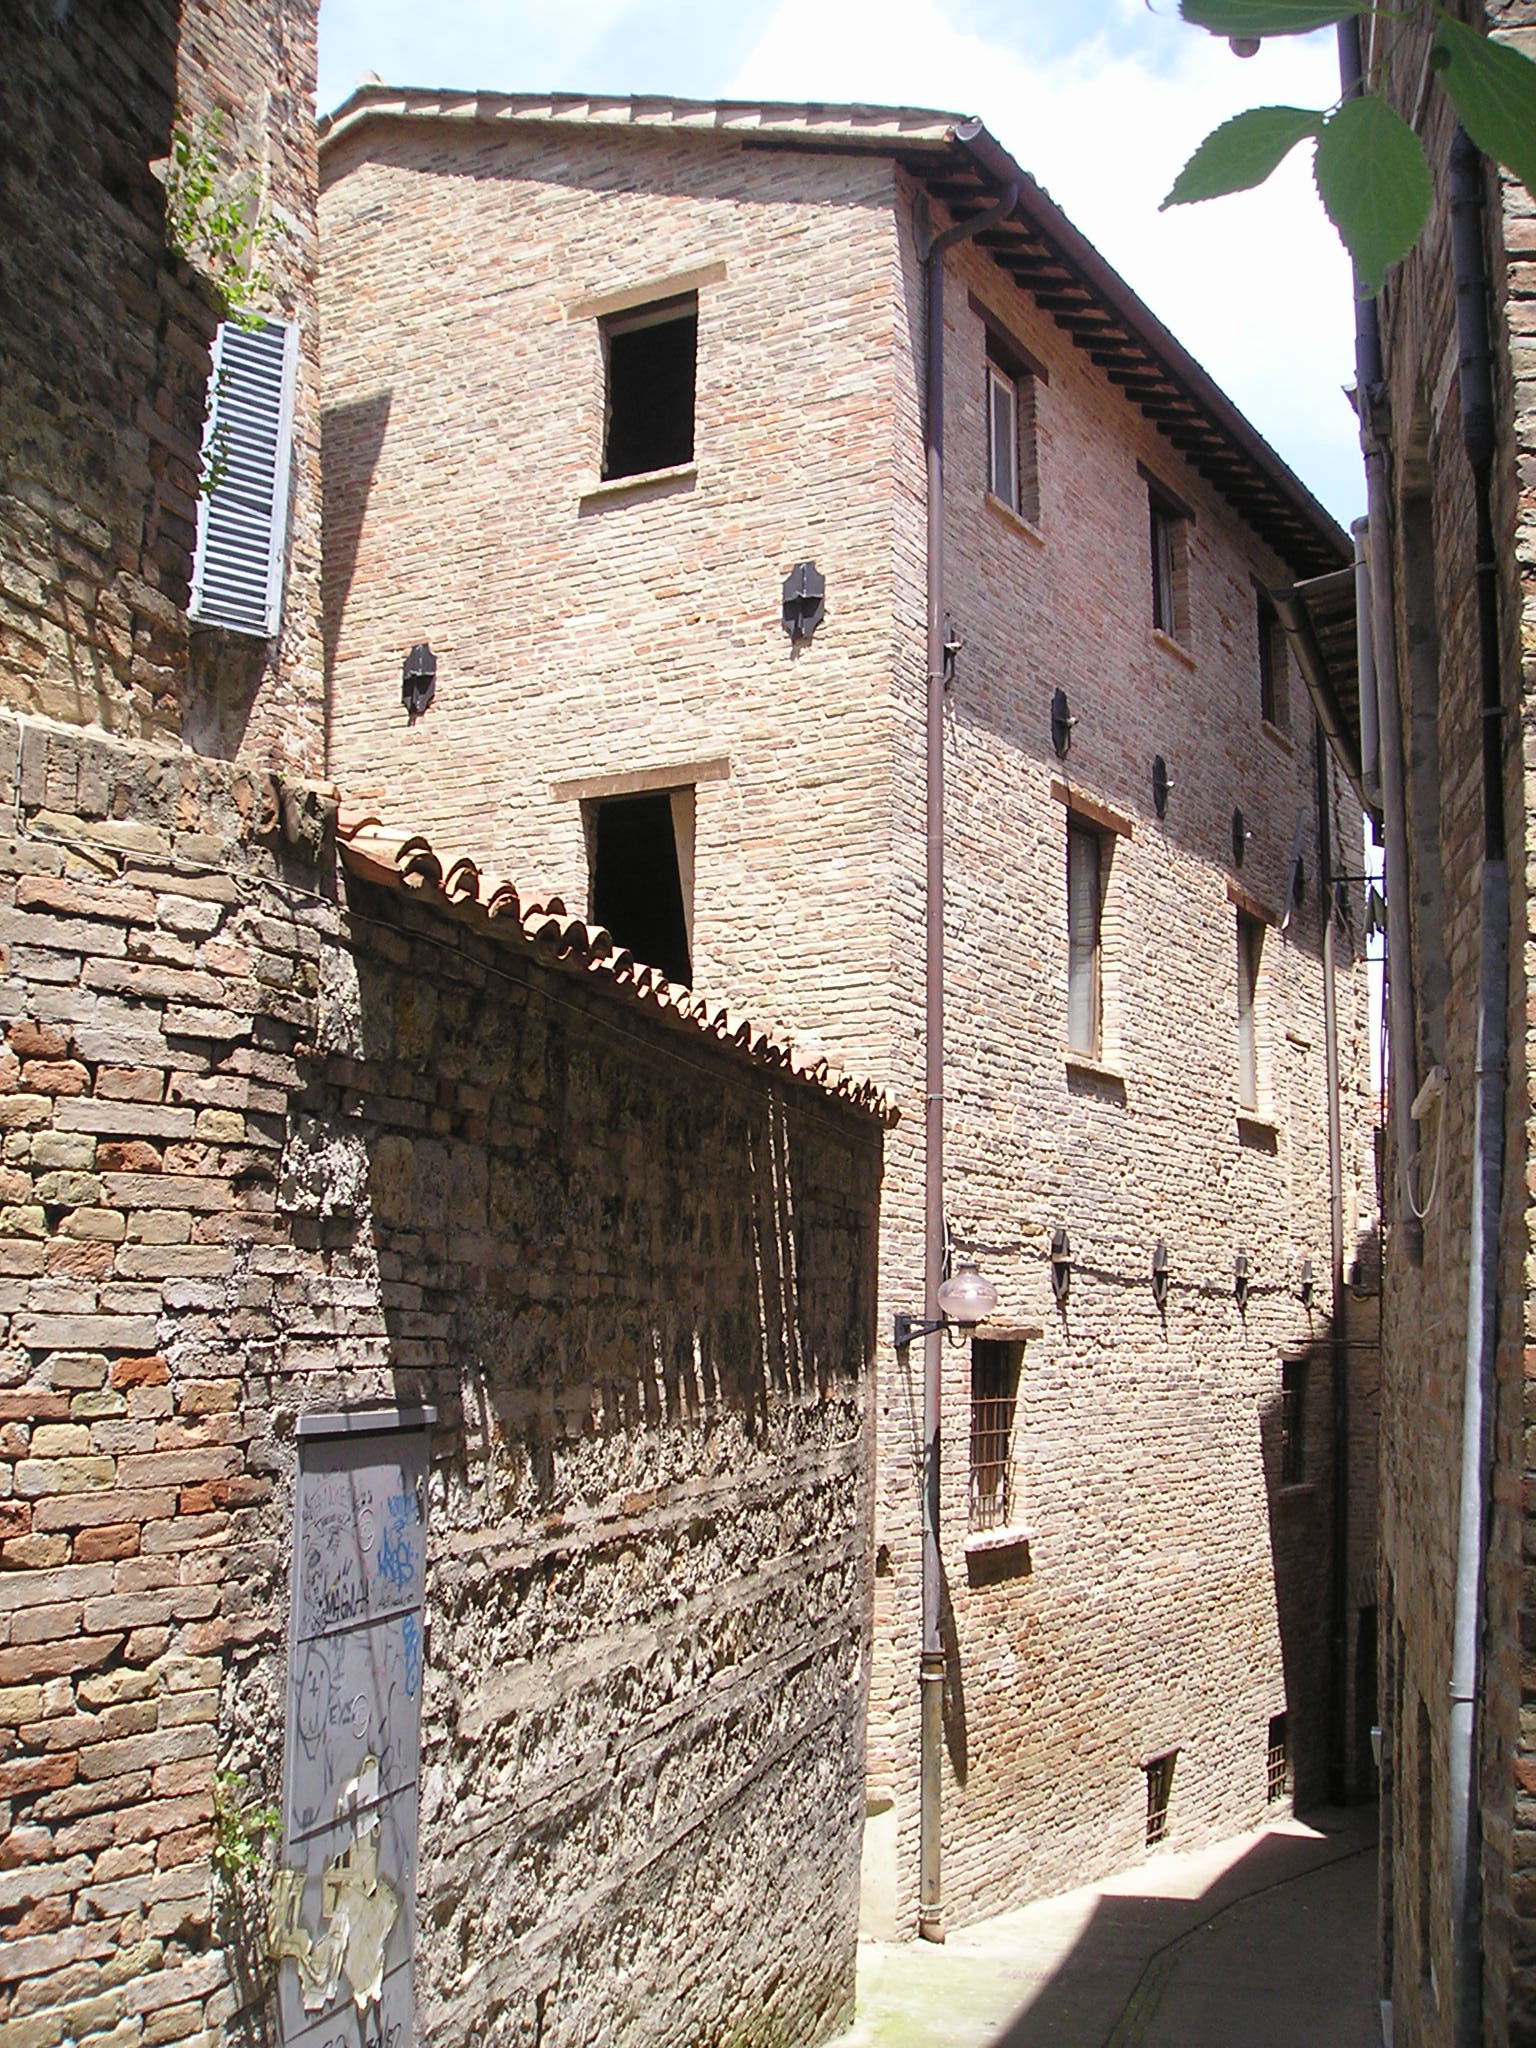 Sinagoga antica (sinagoga) - Urbino (PU) 